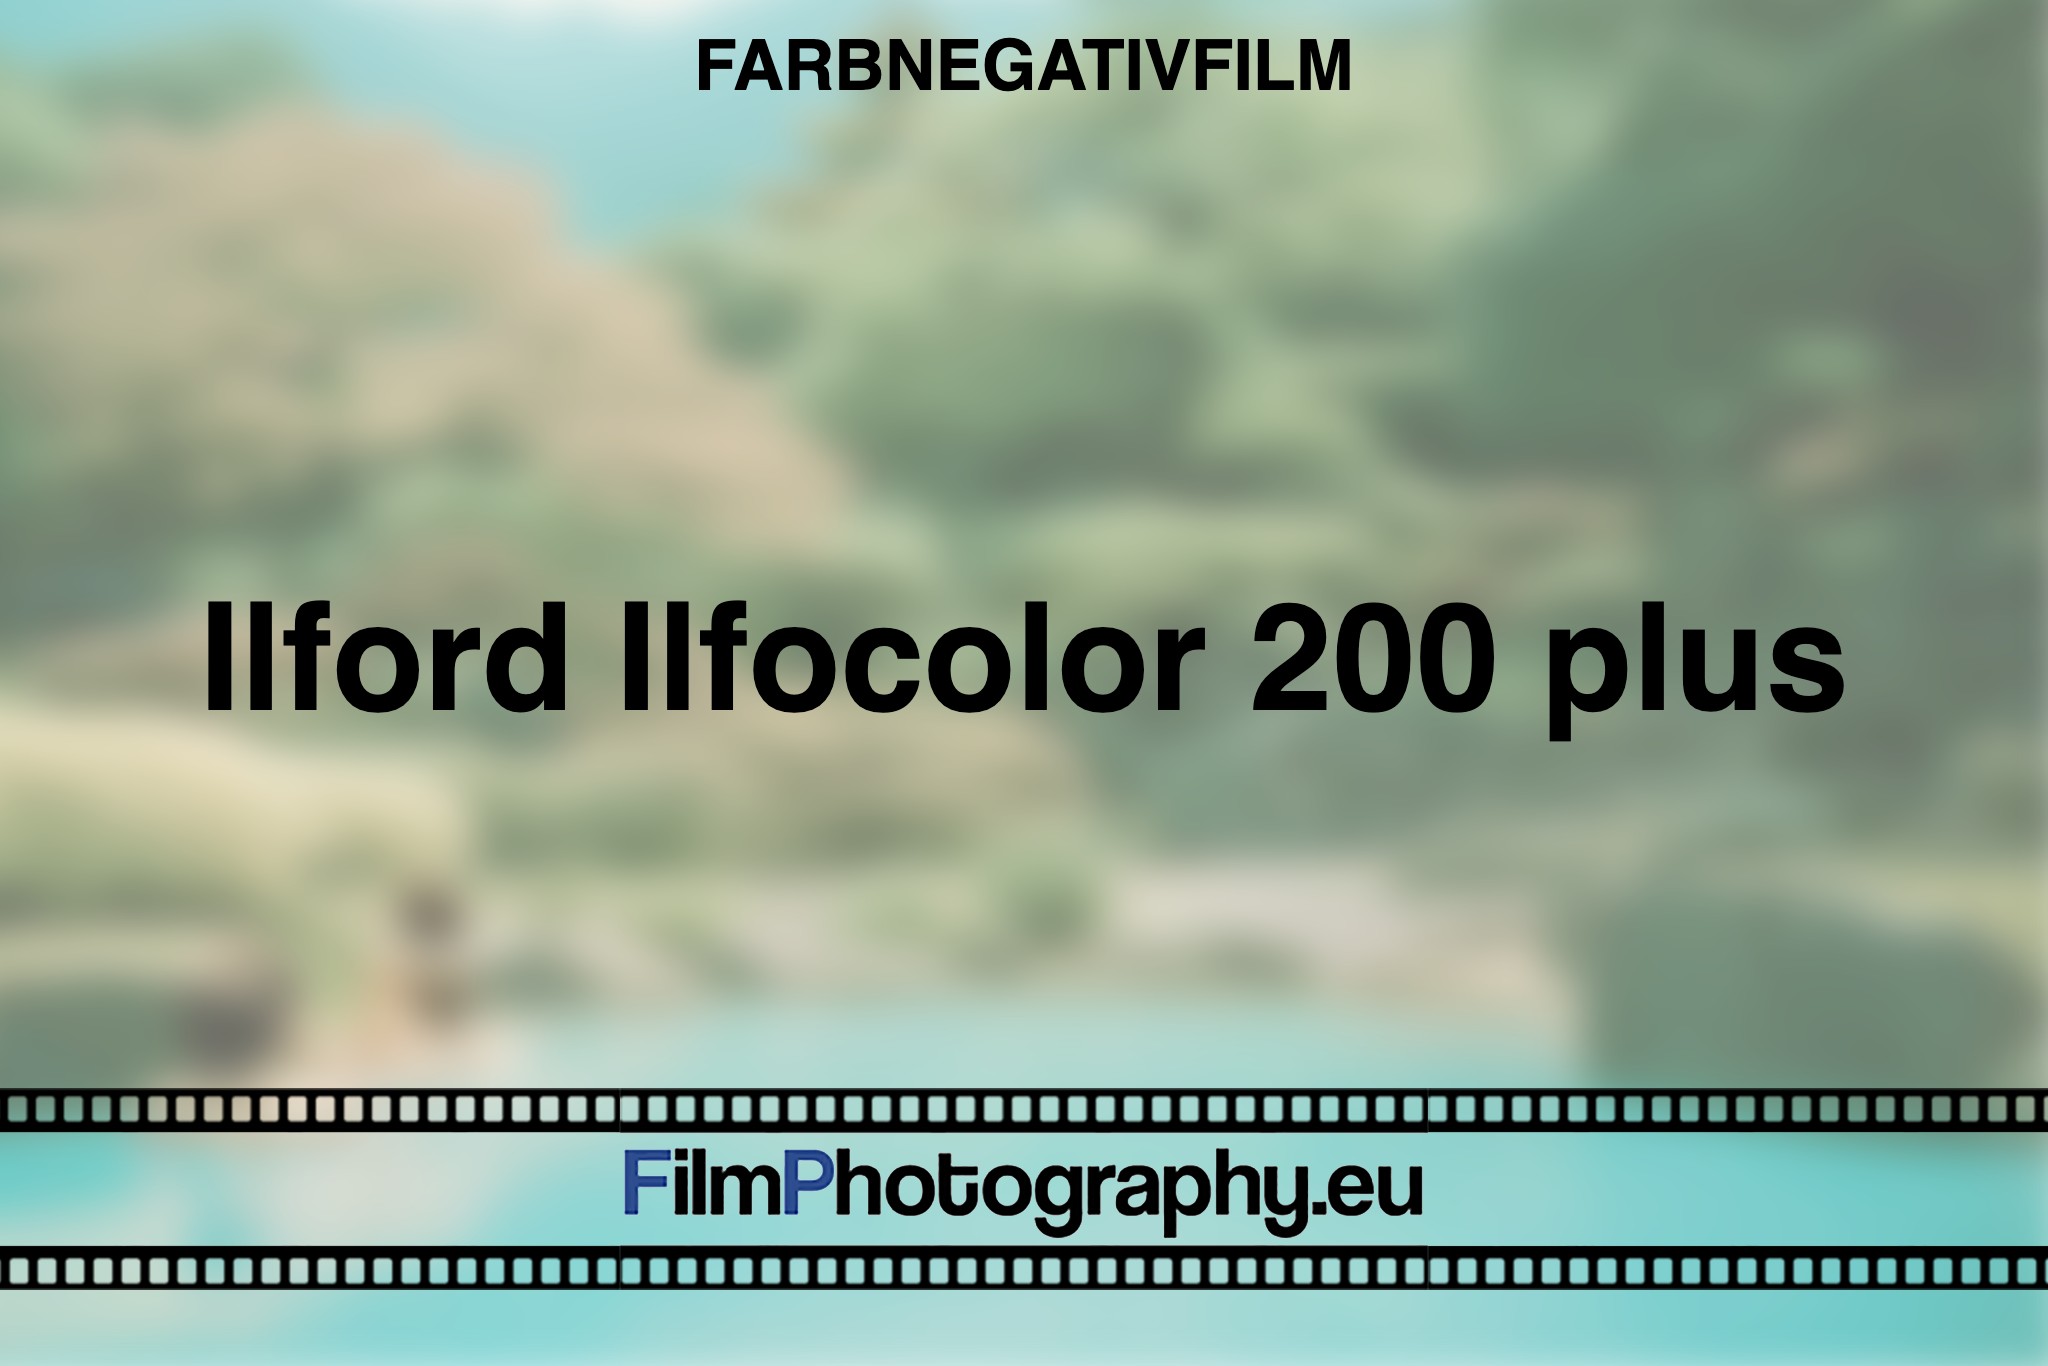 ilford-ilfocolor-200-plus-farbnegativfilm-bnv